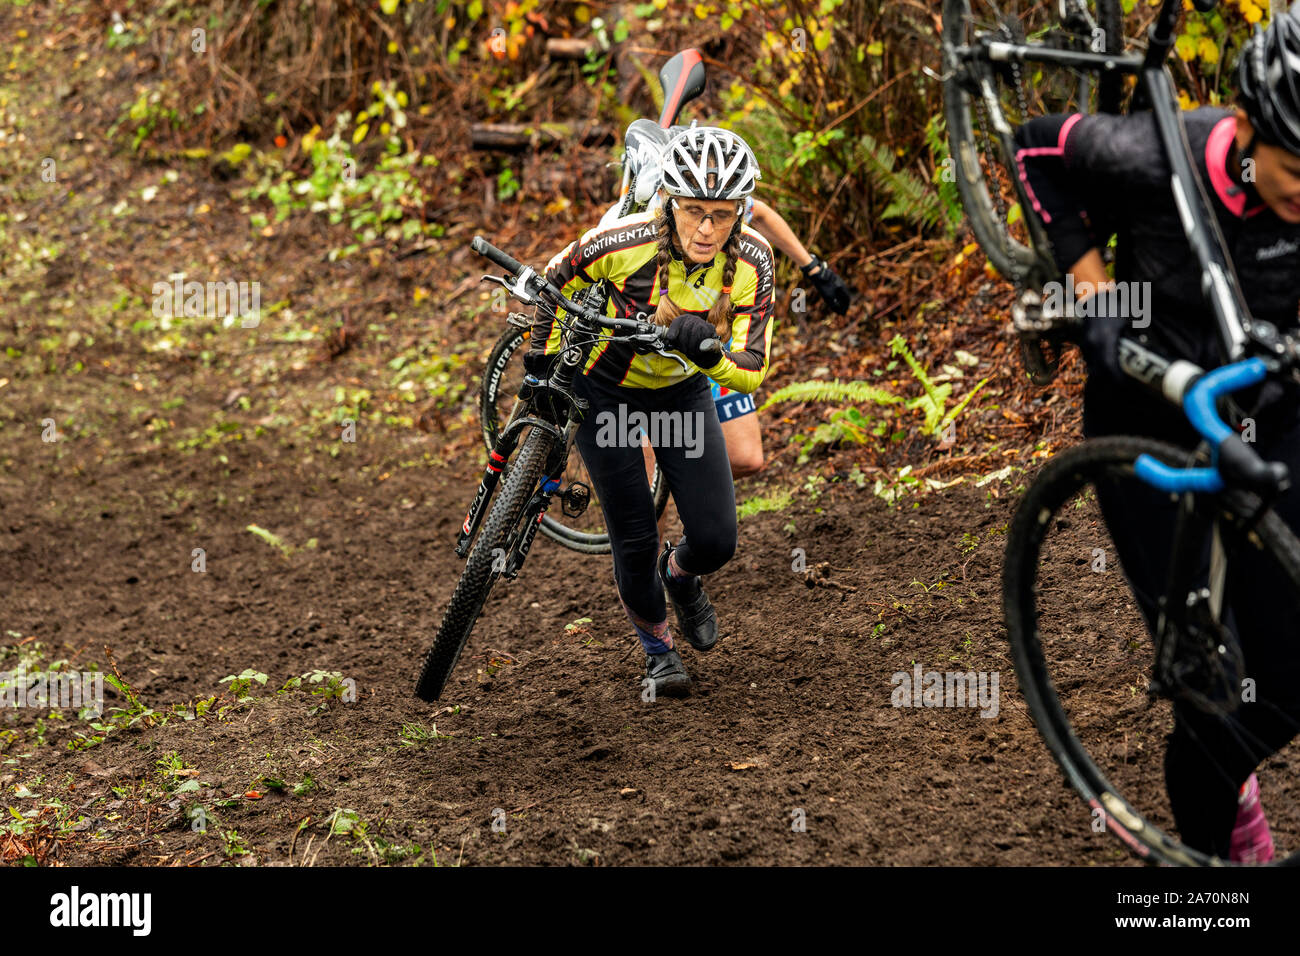 WA17367-00...WASHINGTON - Women's cyclocross race at Fort Stilacomb in Lakewood. MR# S1 Stock Photo